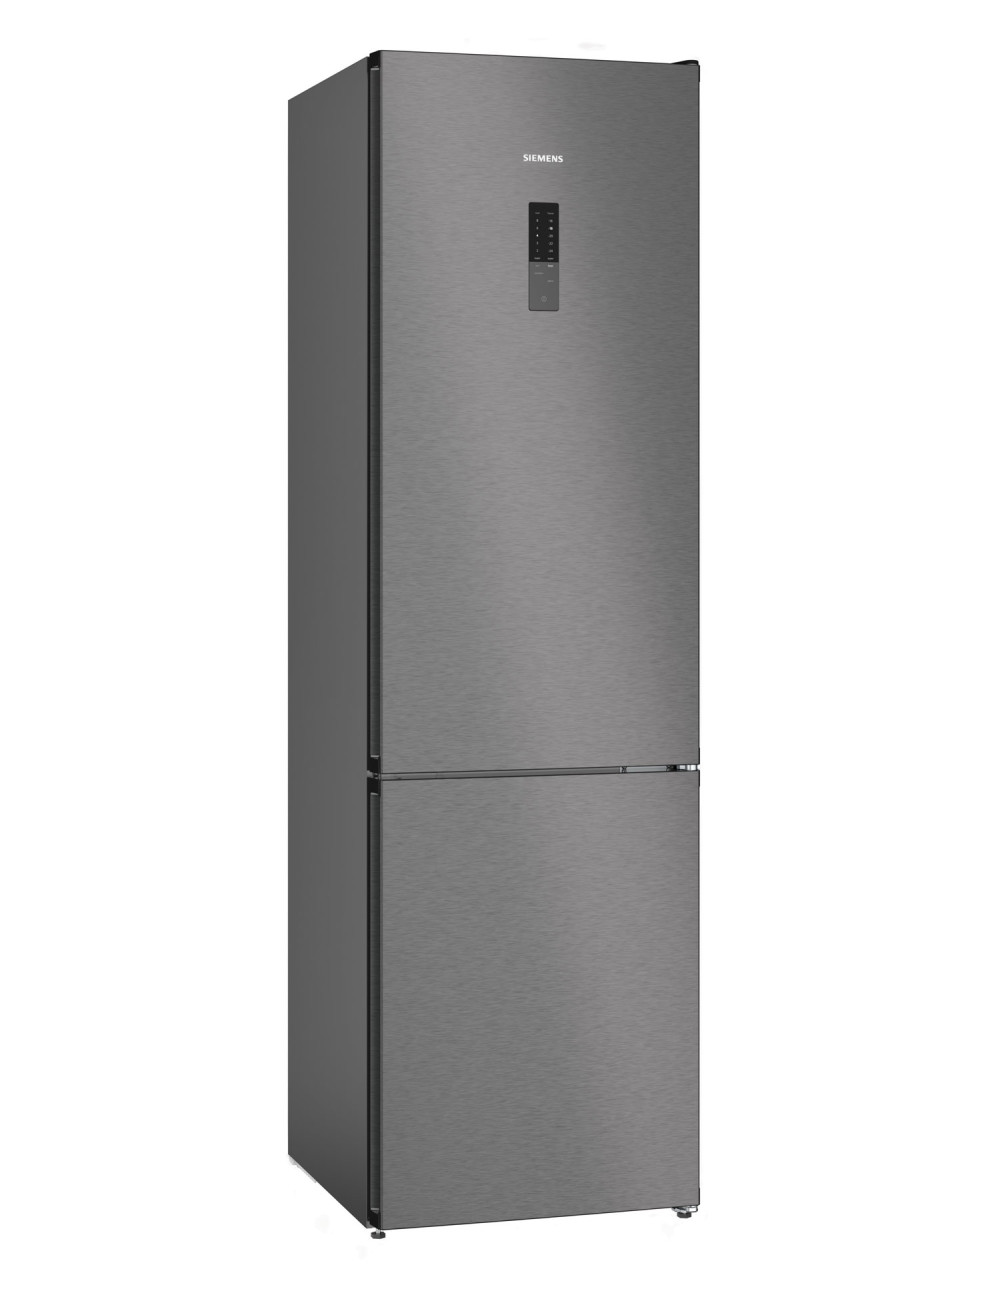 Siemens KG39NXXDFG iQ300 Freestanding Fridge Freezer featured image